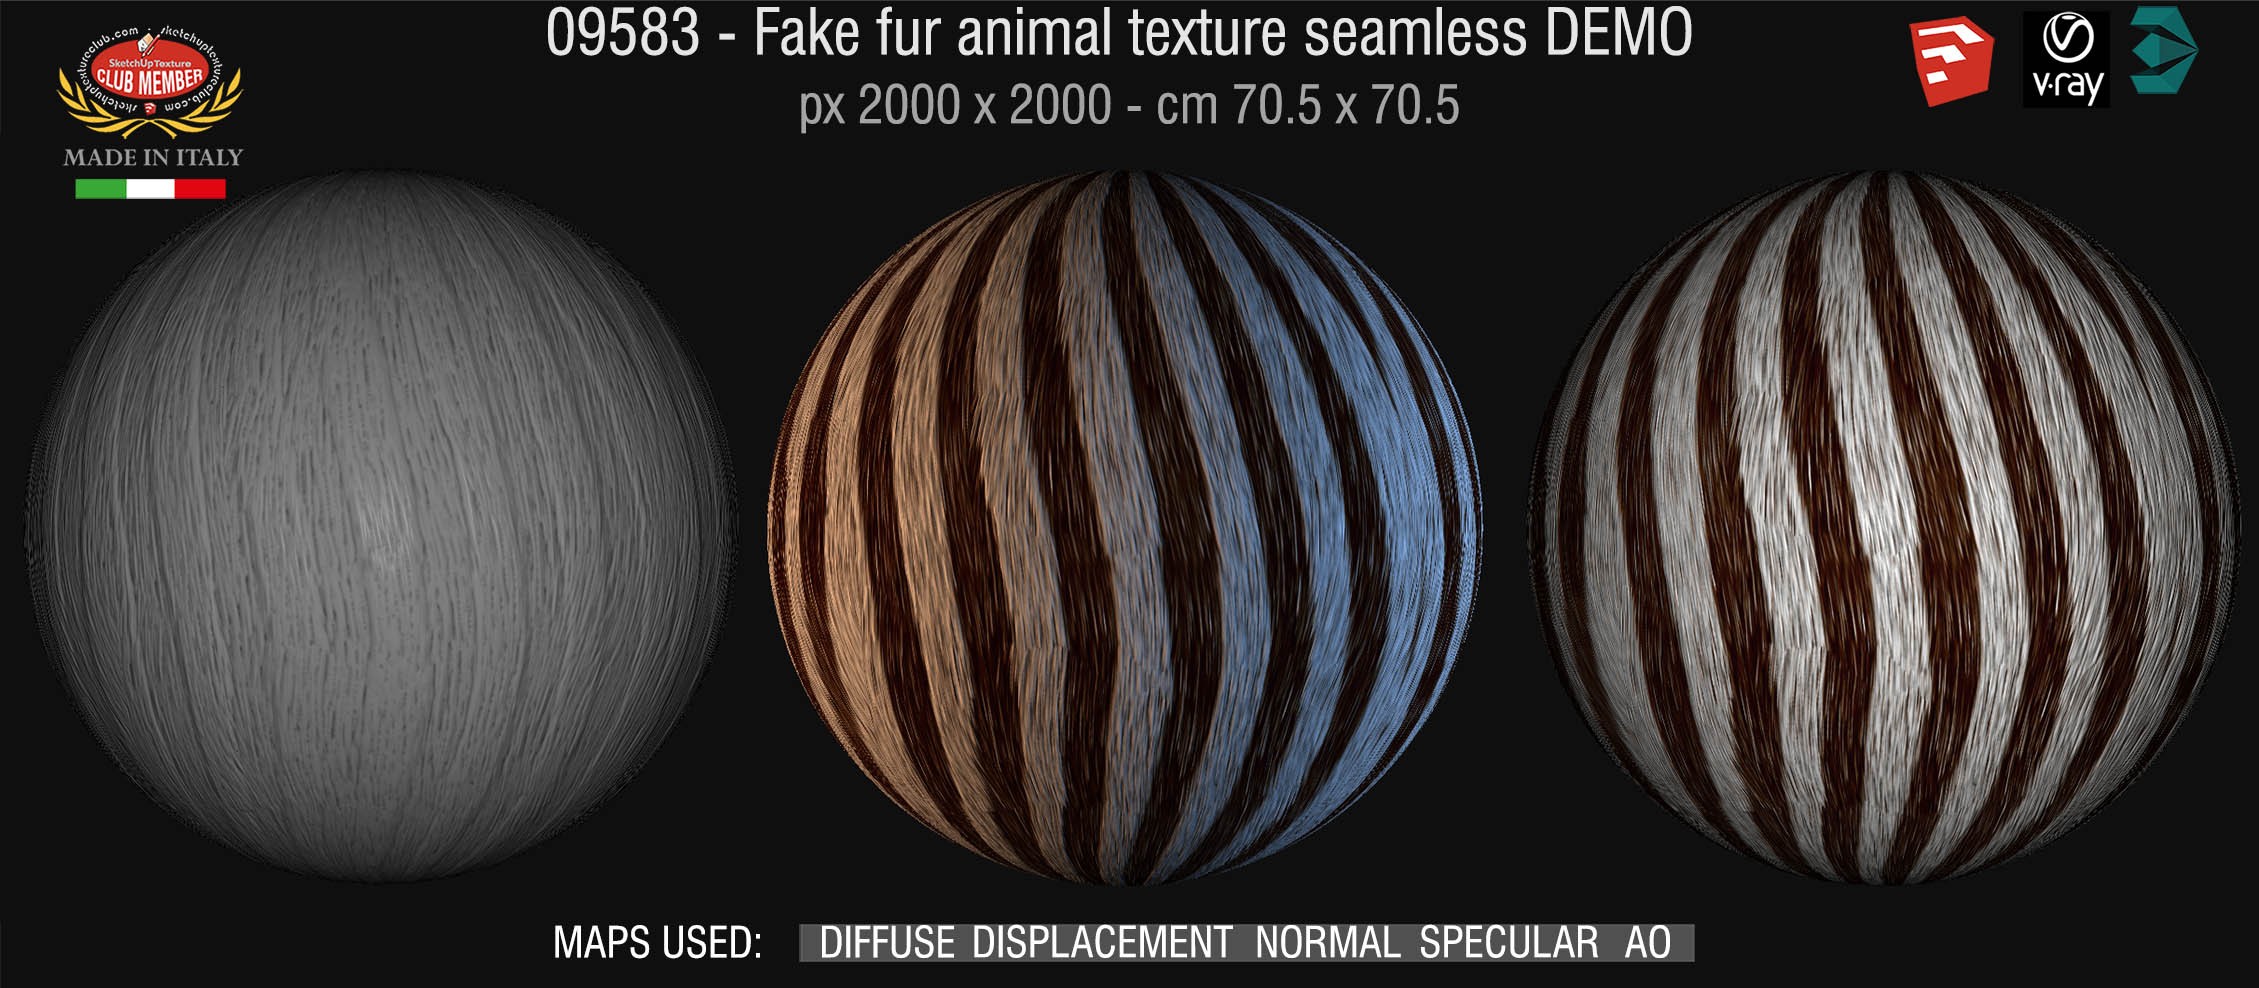 09583 HR fake fur animal texture seamless + maps DEMO